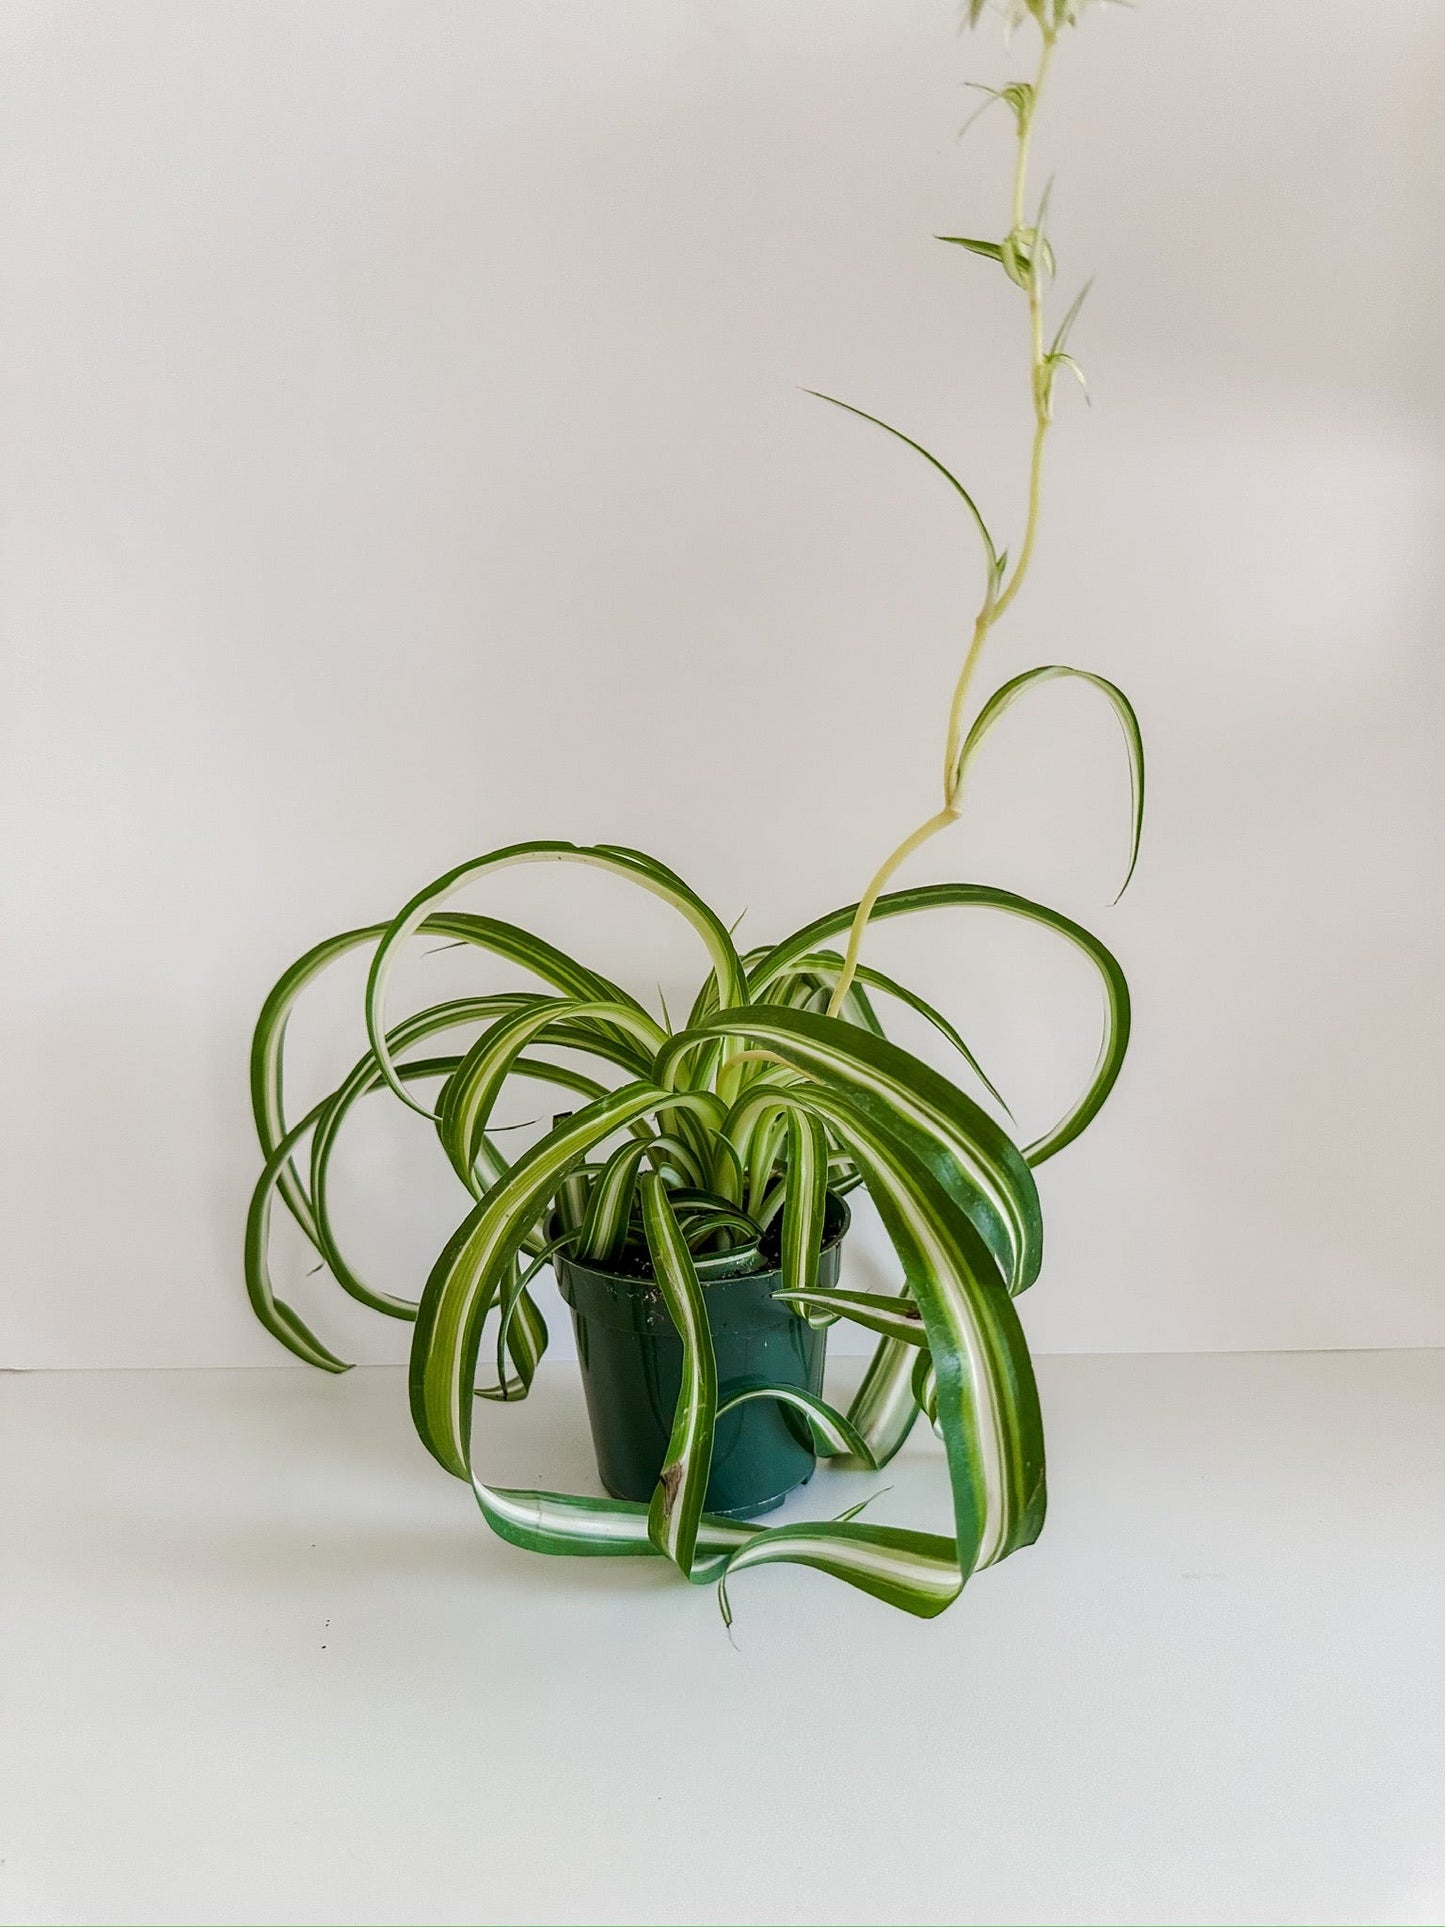 Chlorophytum Spider Plant 'Bonnie'- 🌱  Beginner-Friendly, 🐾 Pet Friendly, Vining - Tropical Houseplant